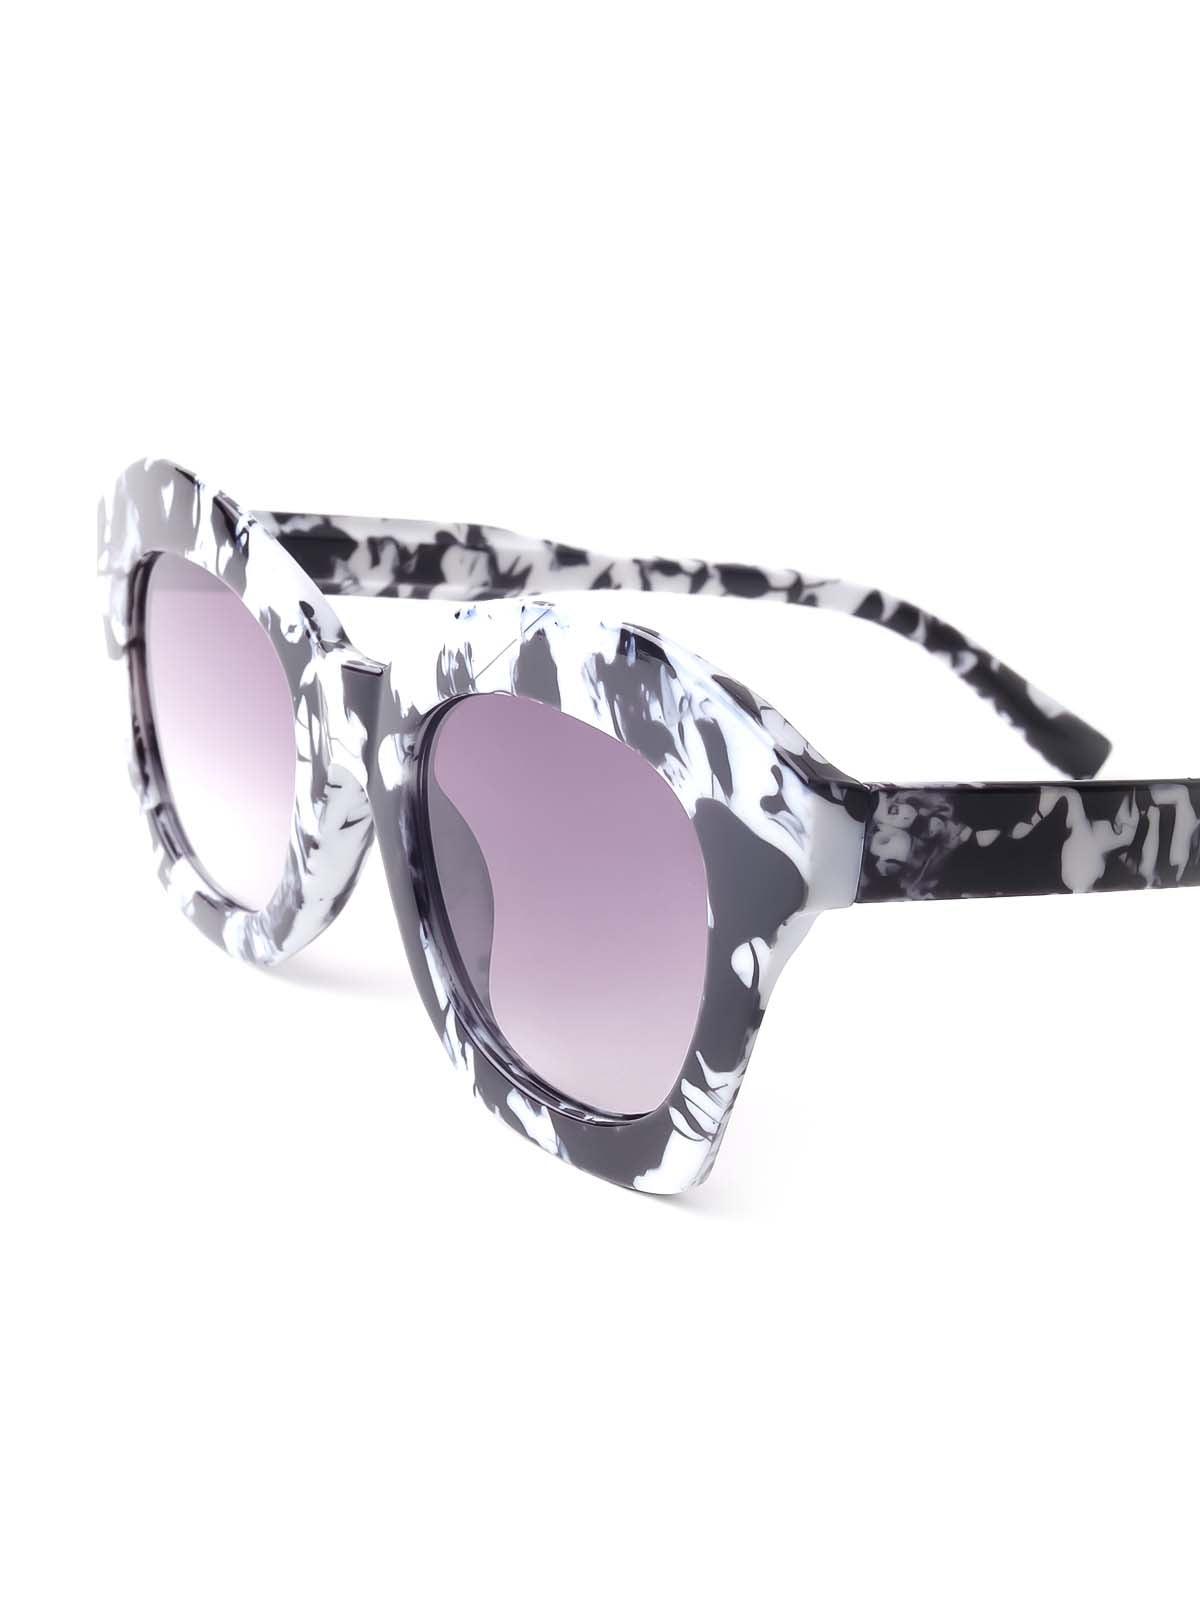 Odette Black And White Textured Frame Sunglasses For Women